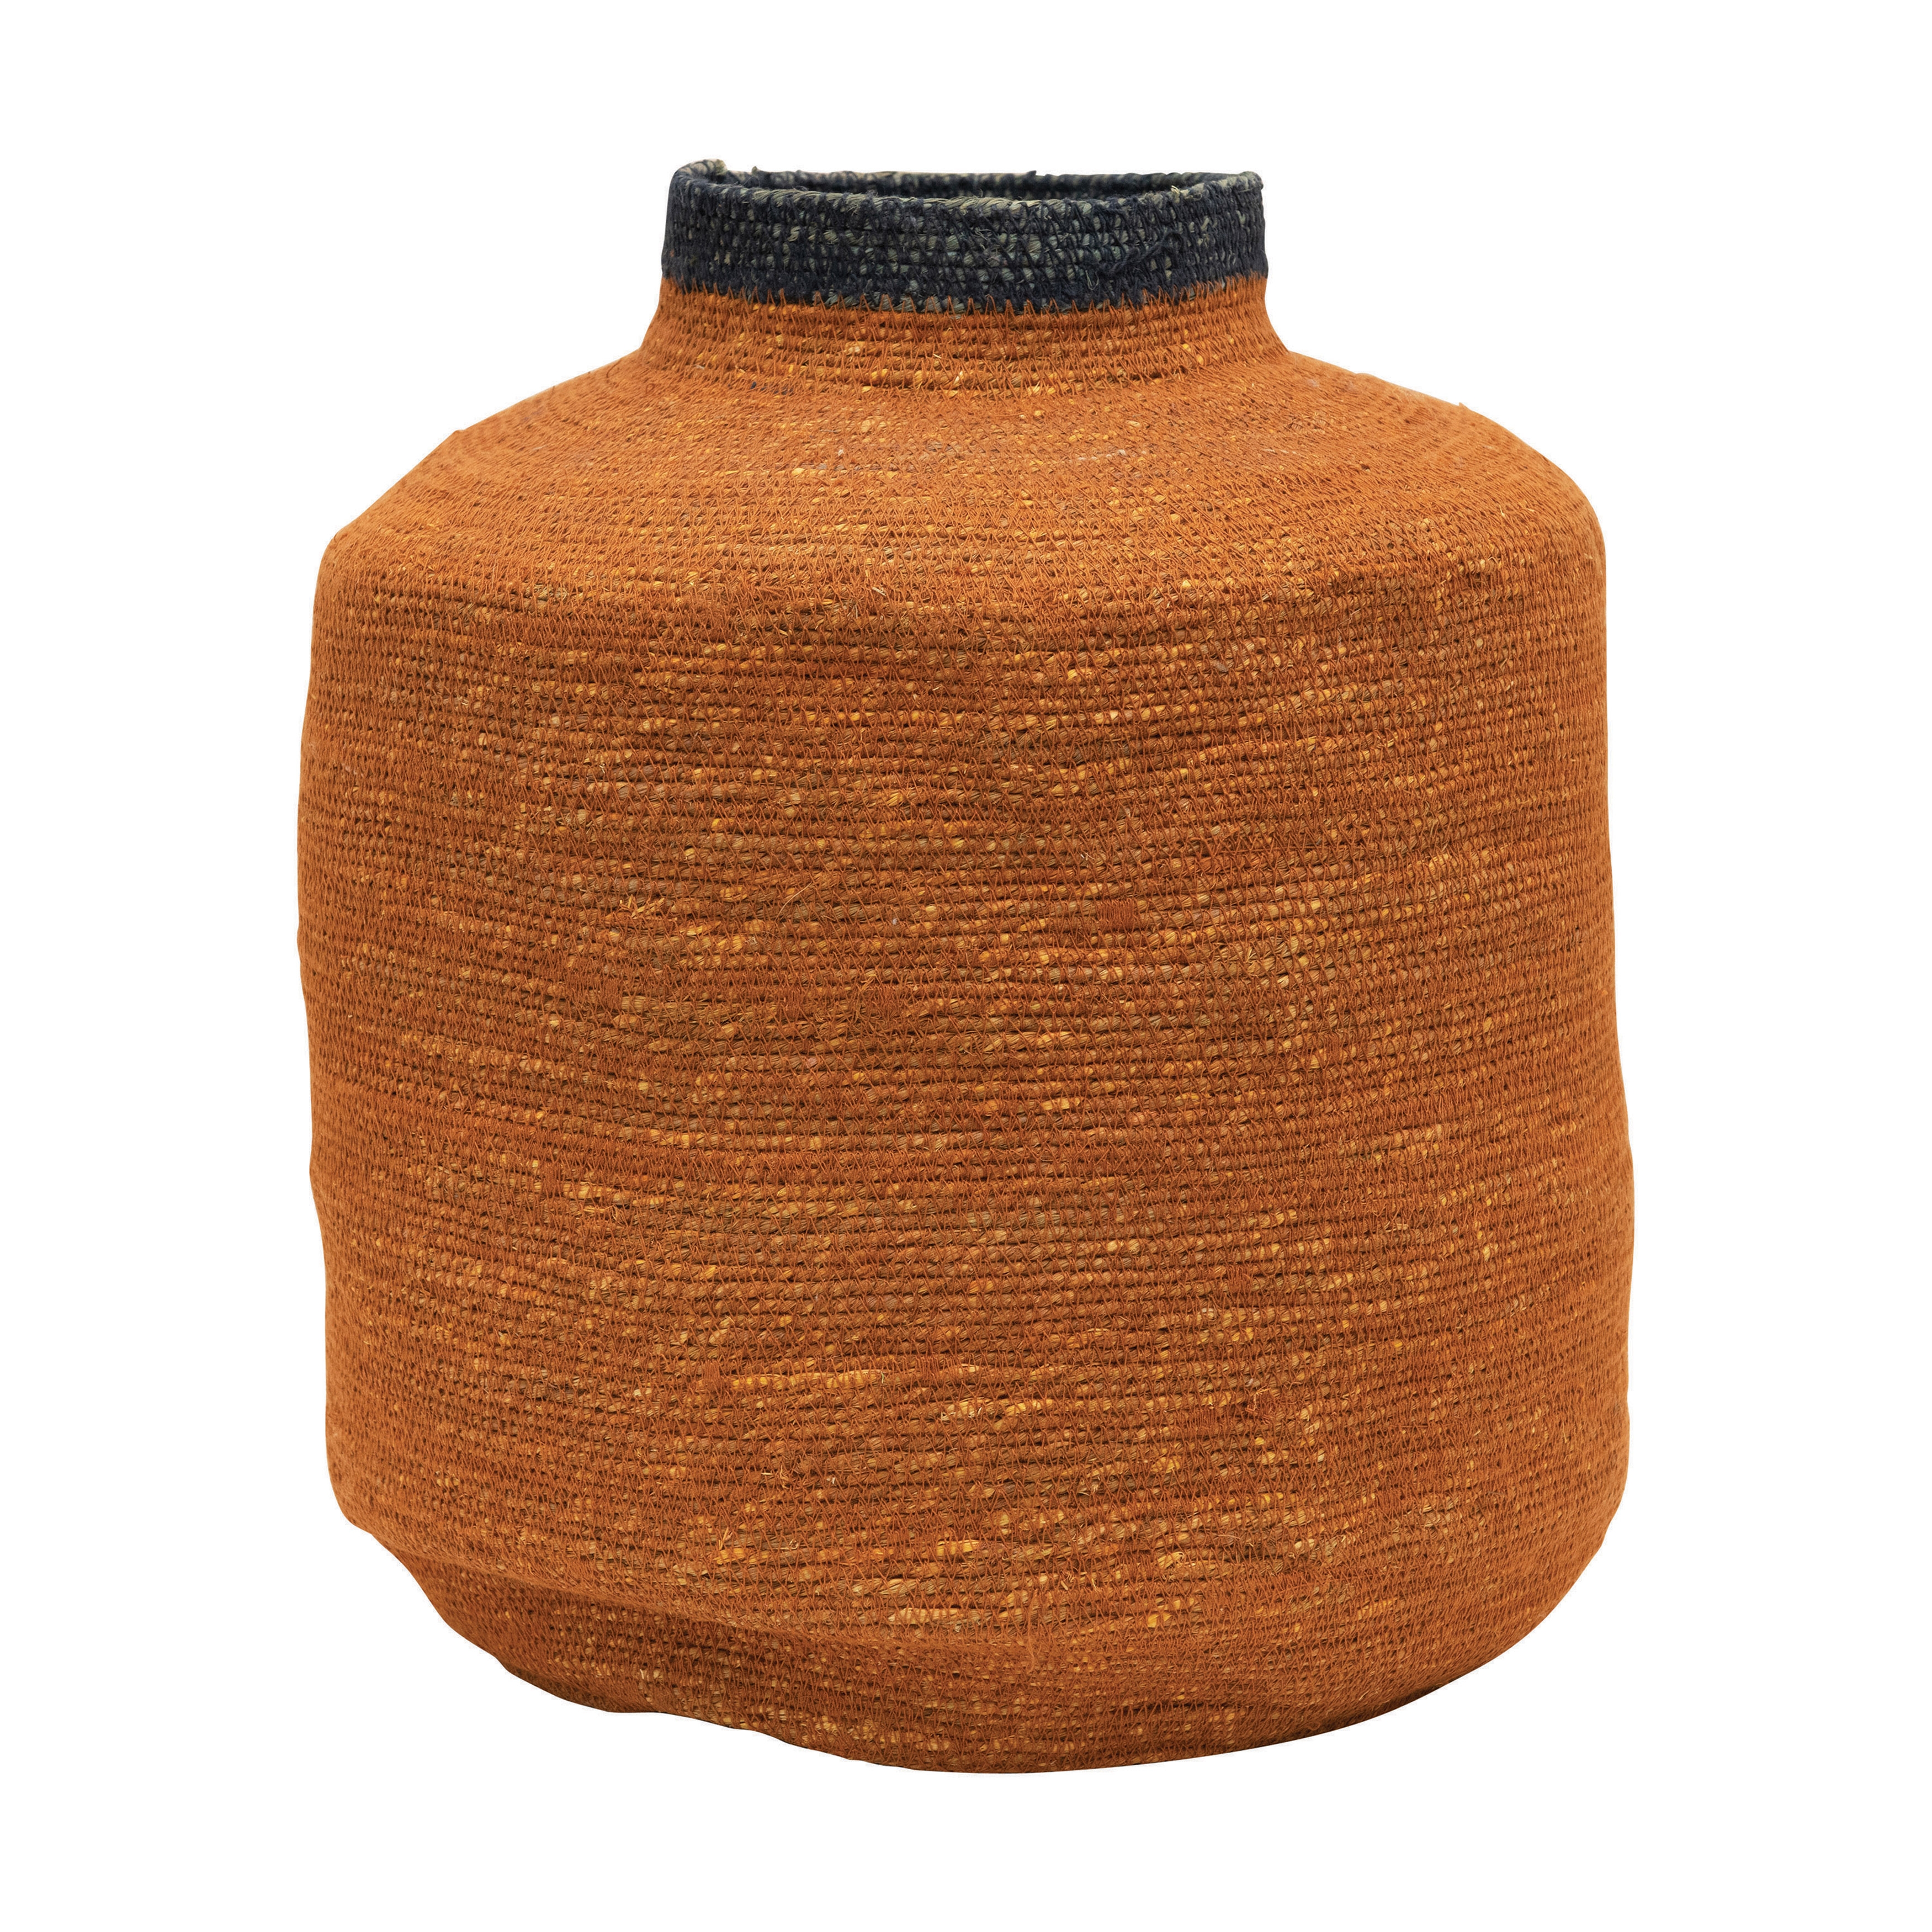 Hand-Woven Seagrass Basket, Orange & Navy - Image 0